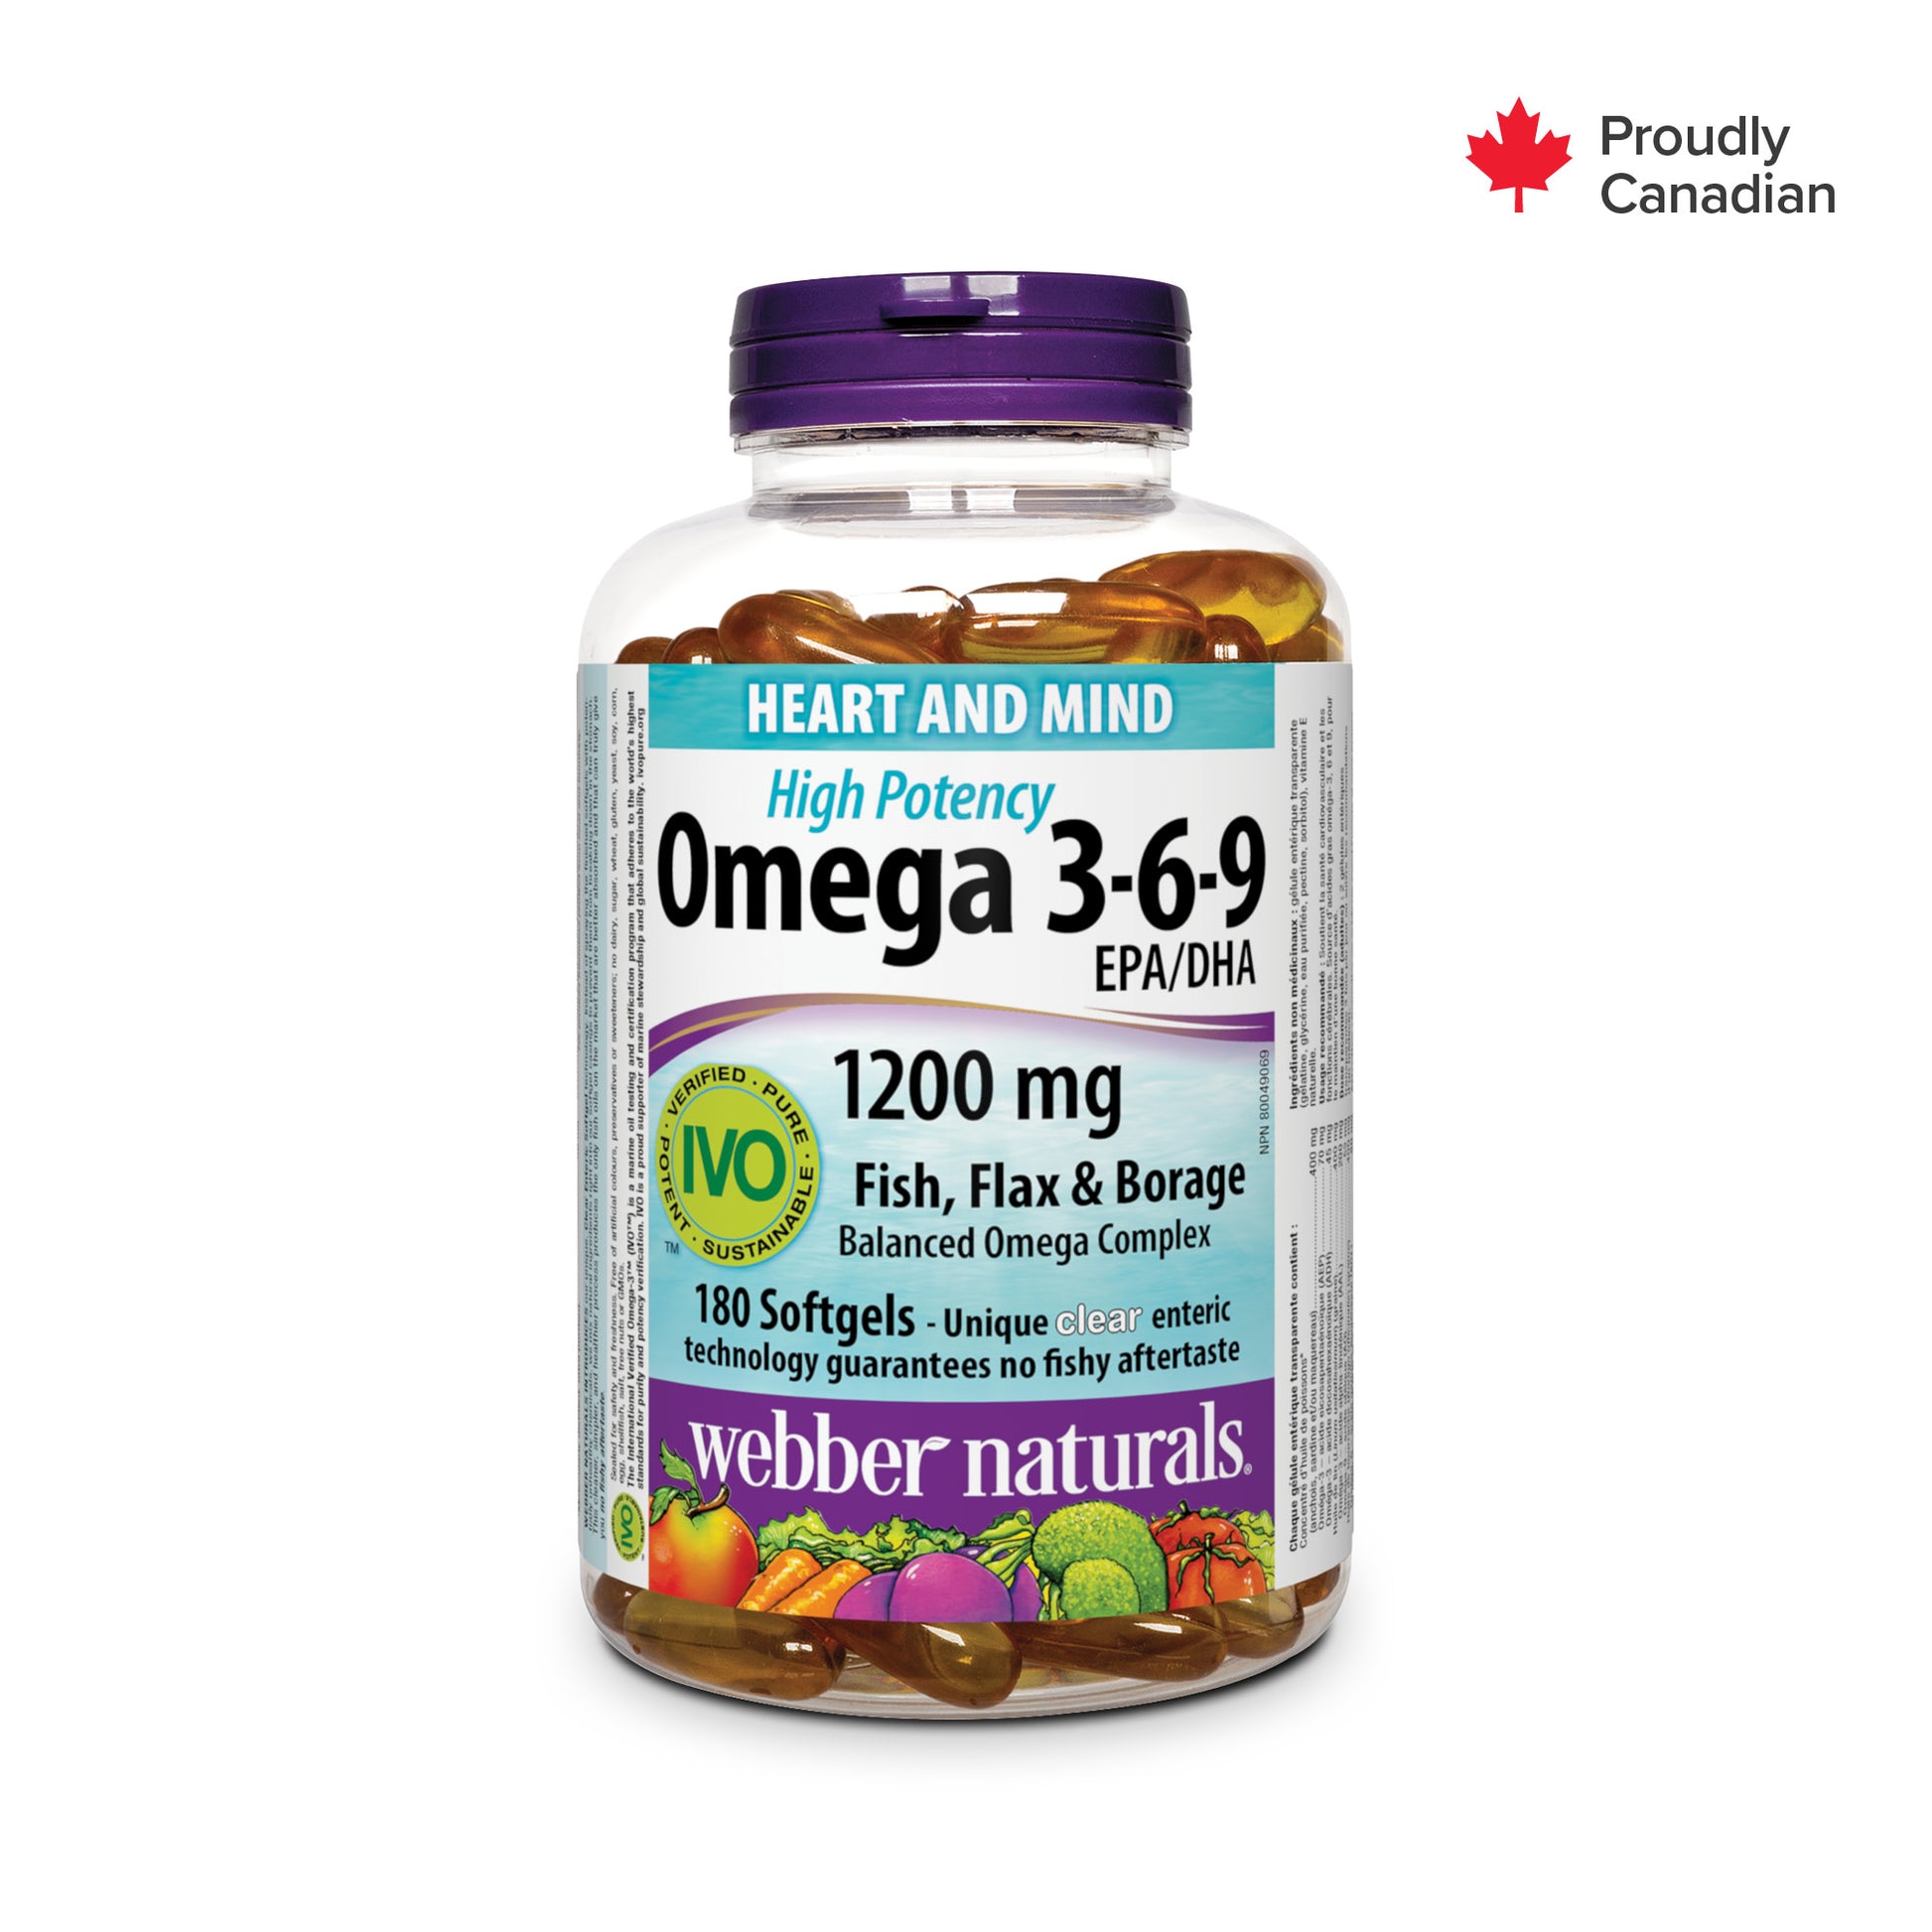 Omega 3-6-9 High Potency Fish, Flax & Borage 1200 mg for Webber Naturals|v|hi-res|WN3477